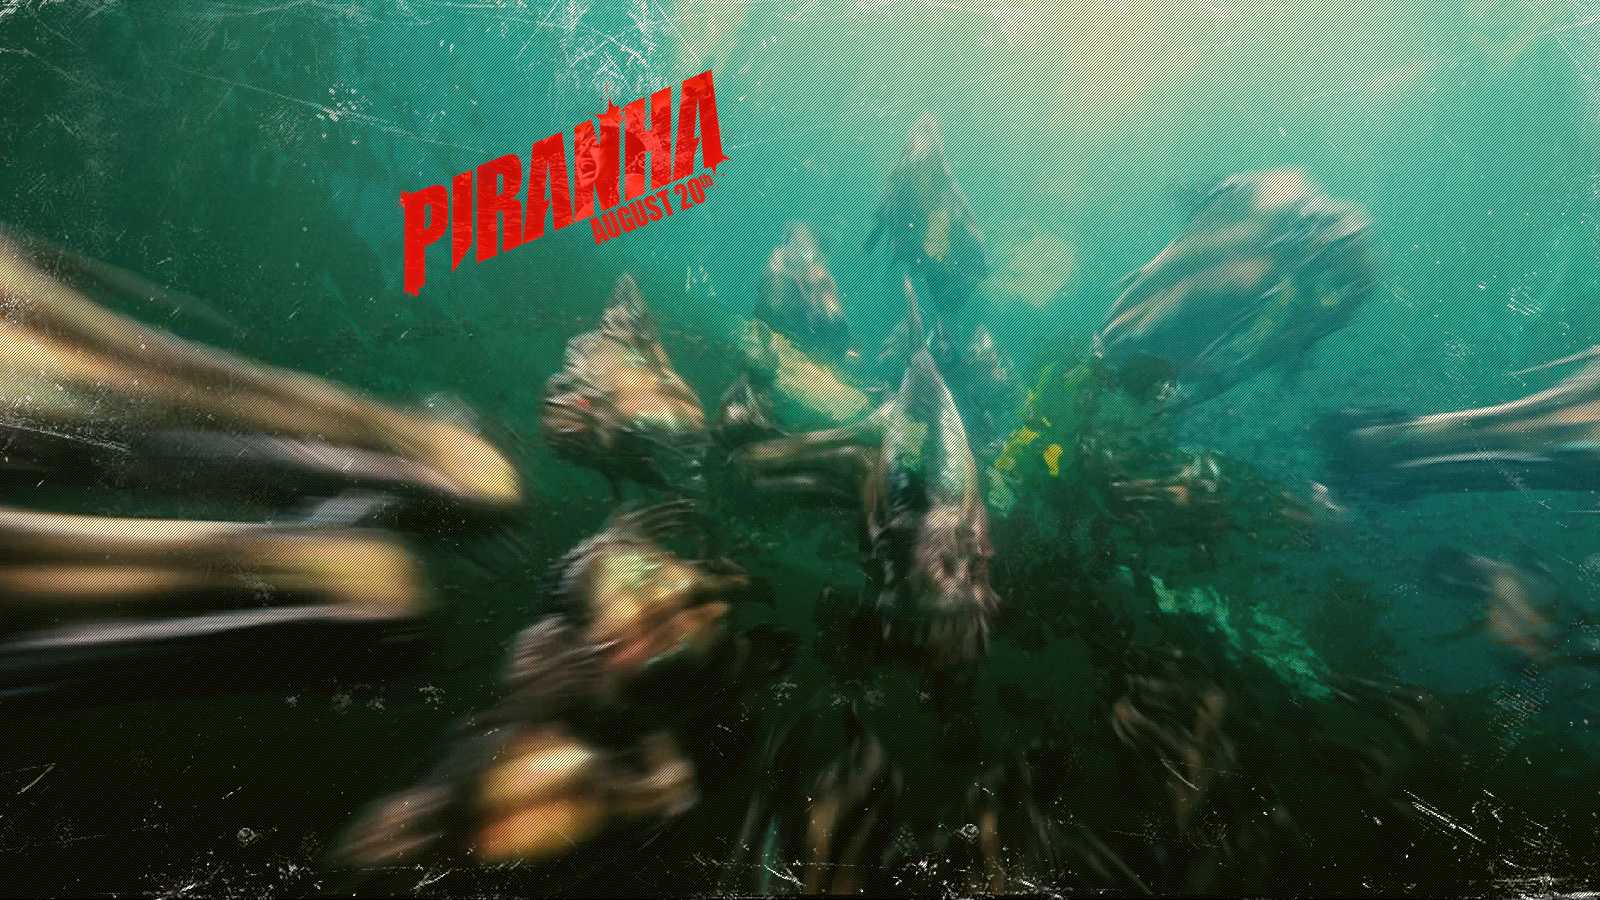 old piranha movie